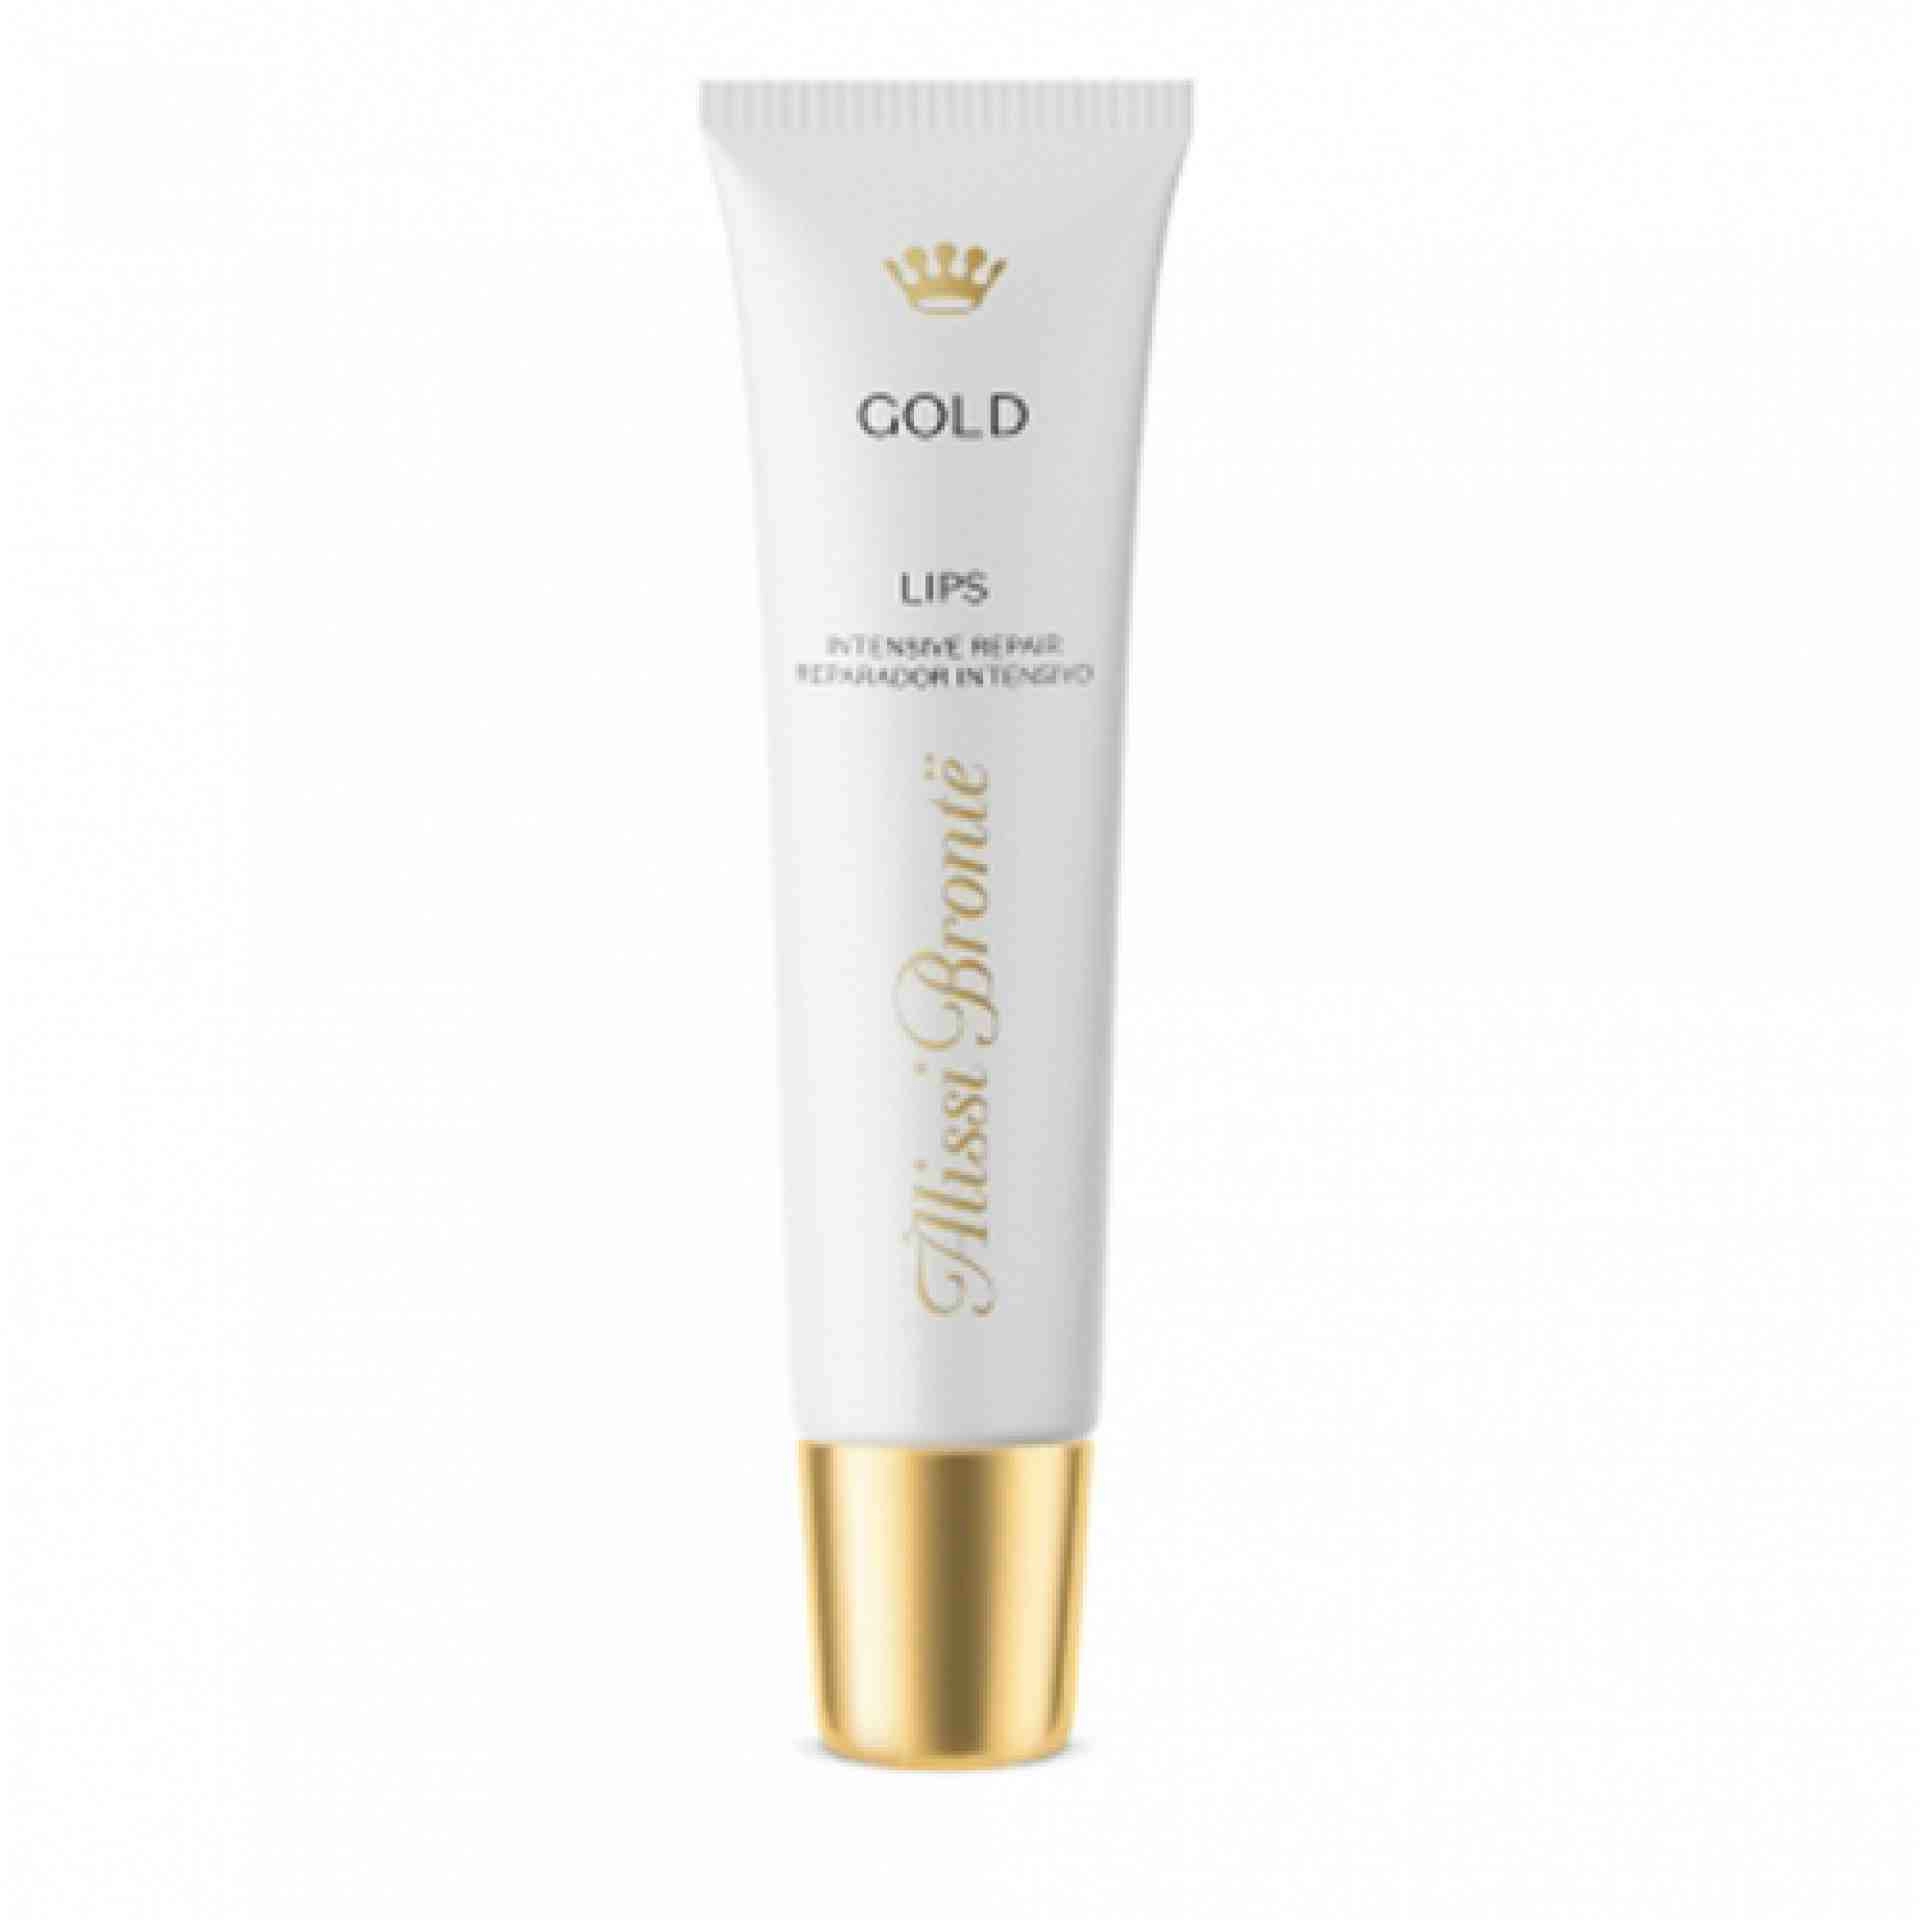 Gold Lips I Reparador intensivo de labios 15ml - Diamond Gold - Alissi Brontë ®